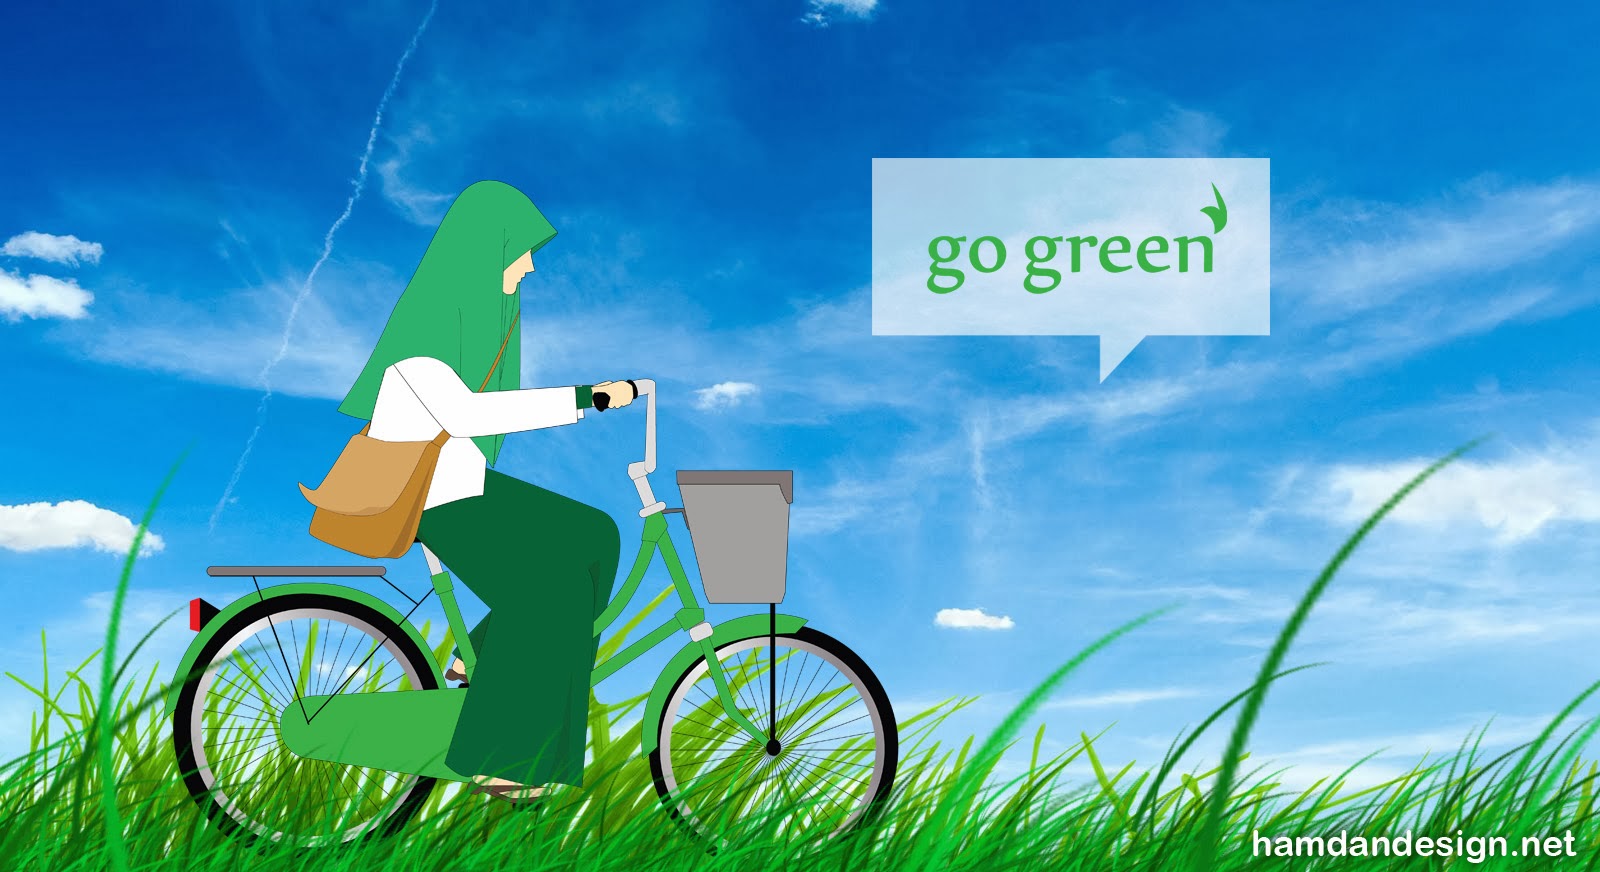 Kartun Akhwat Muslimah Bersepeda Go Green Kartun Dakwah Islam